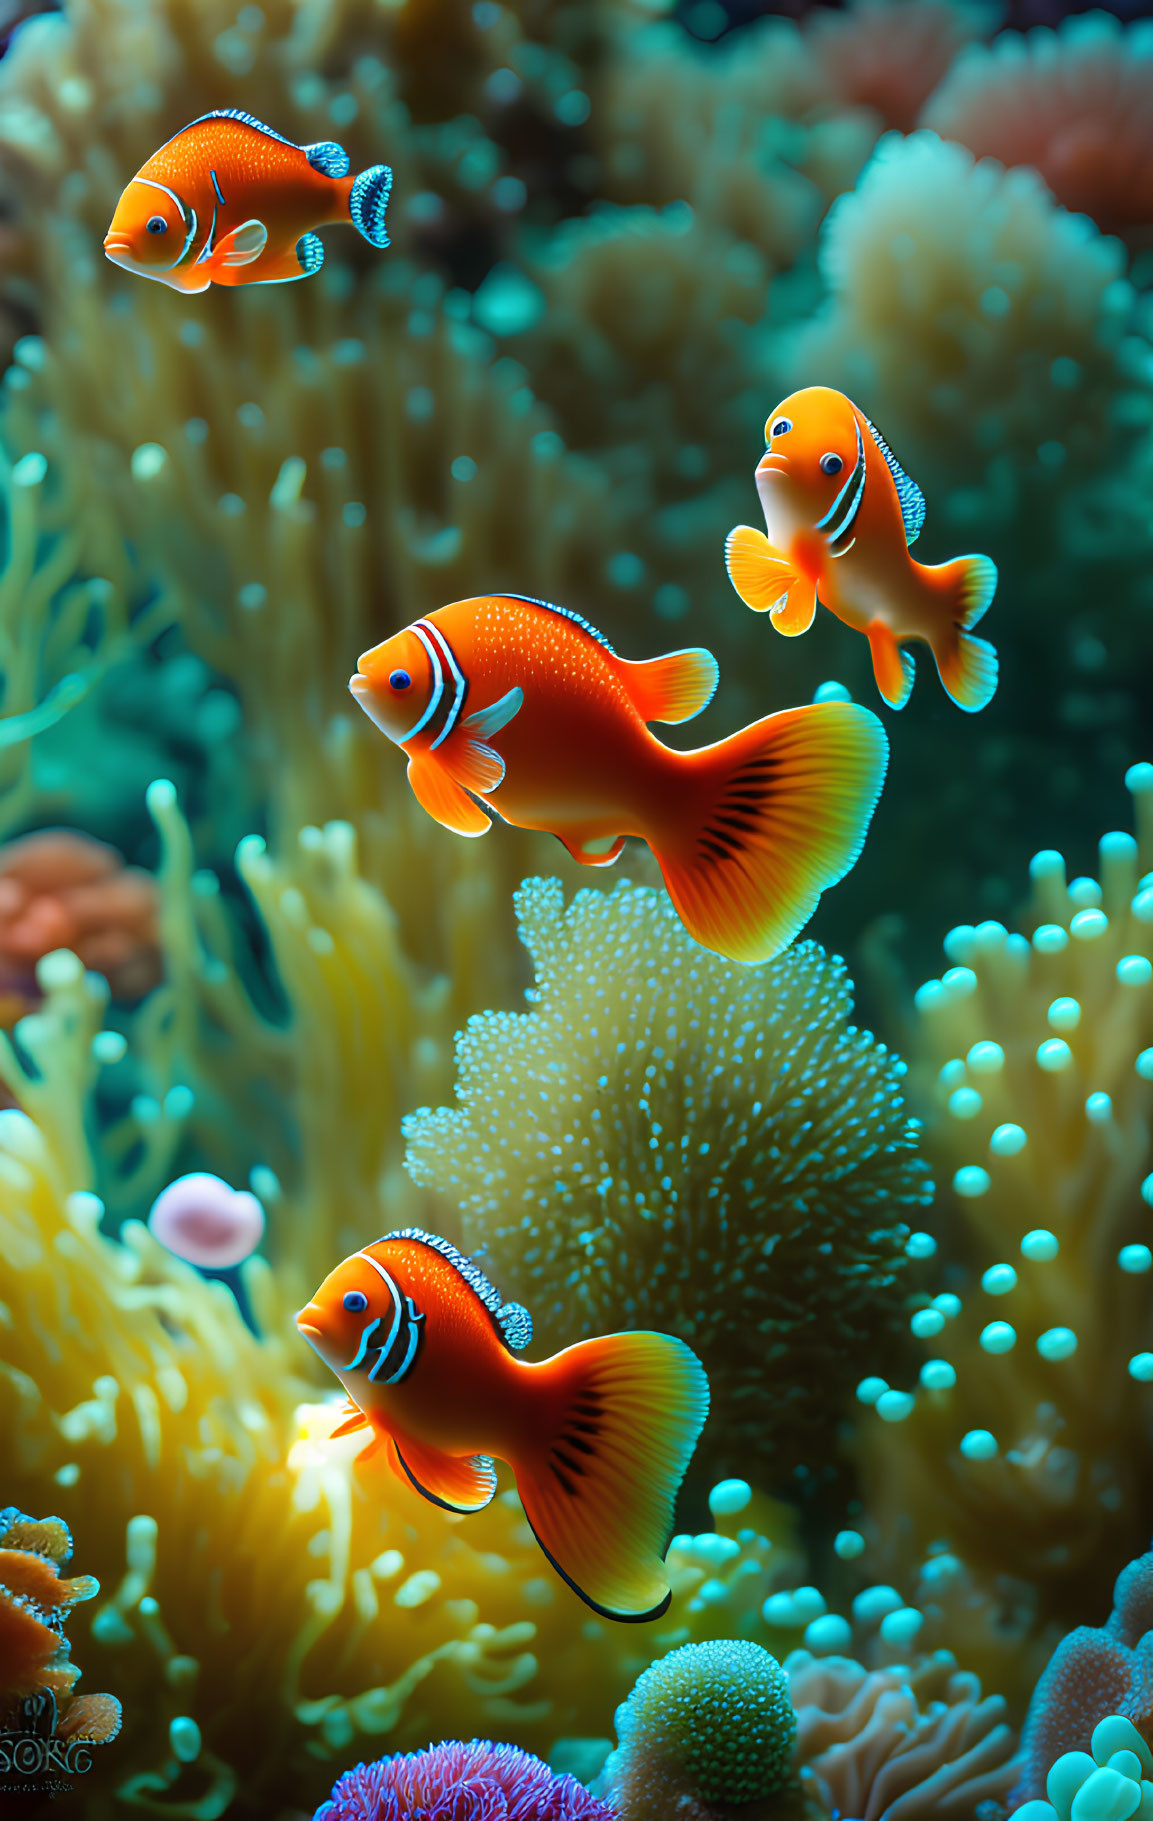 Colorful Clownfish Among Vibrant Sea Anemones